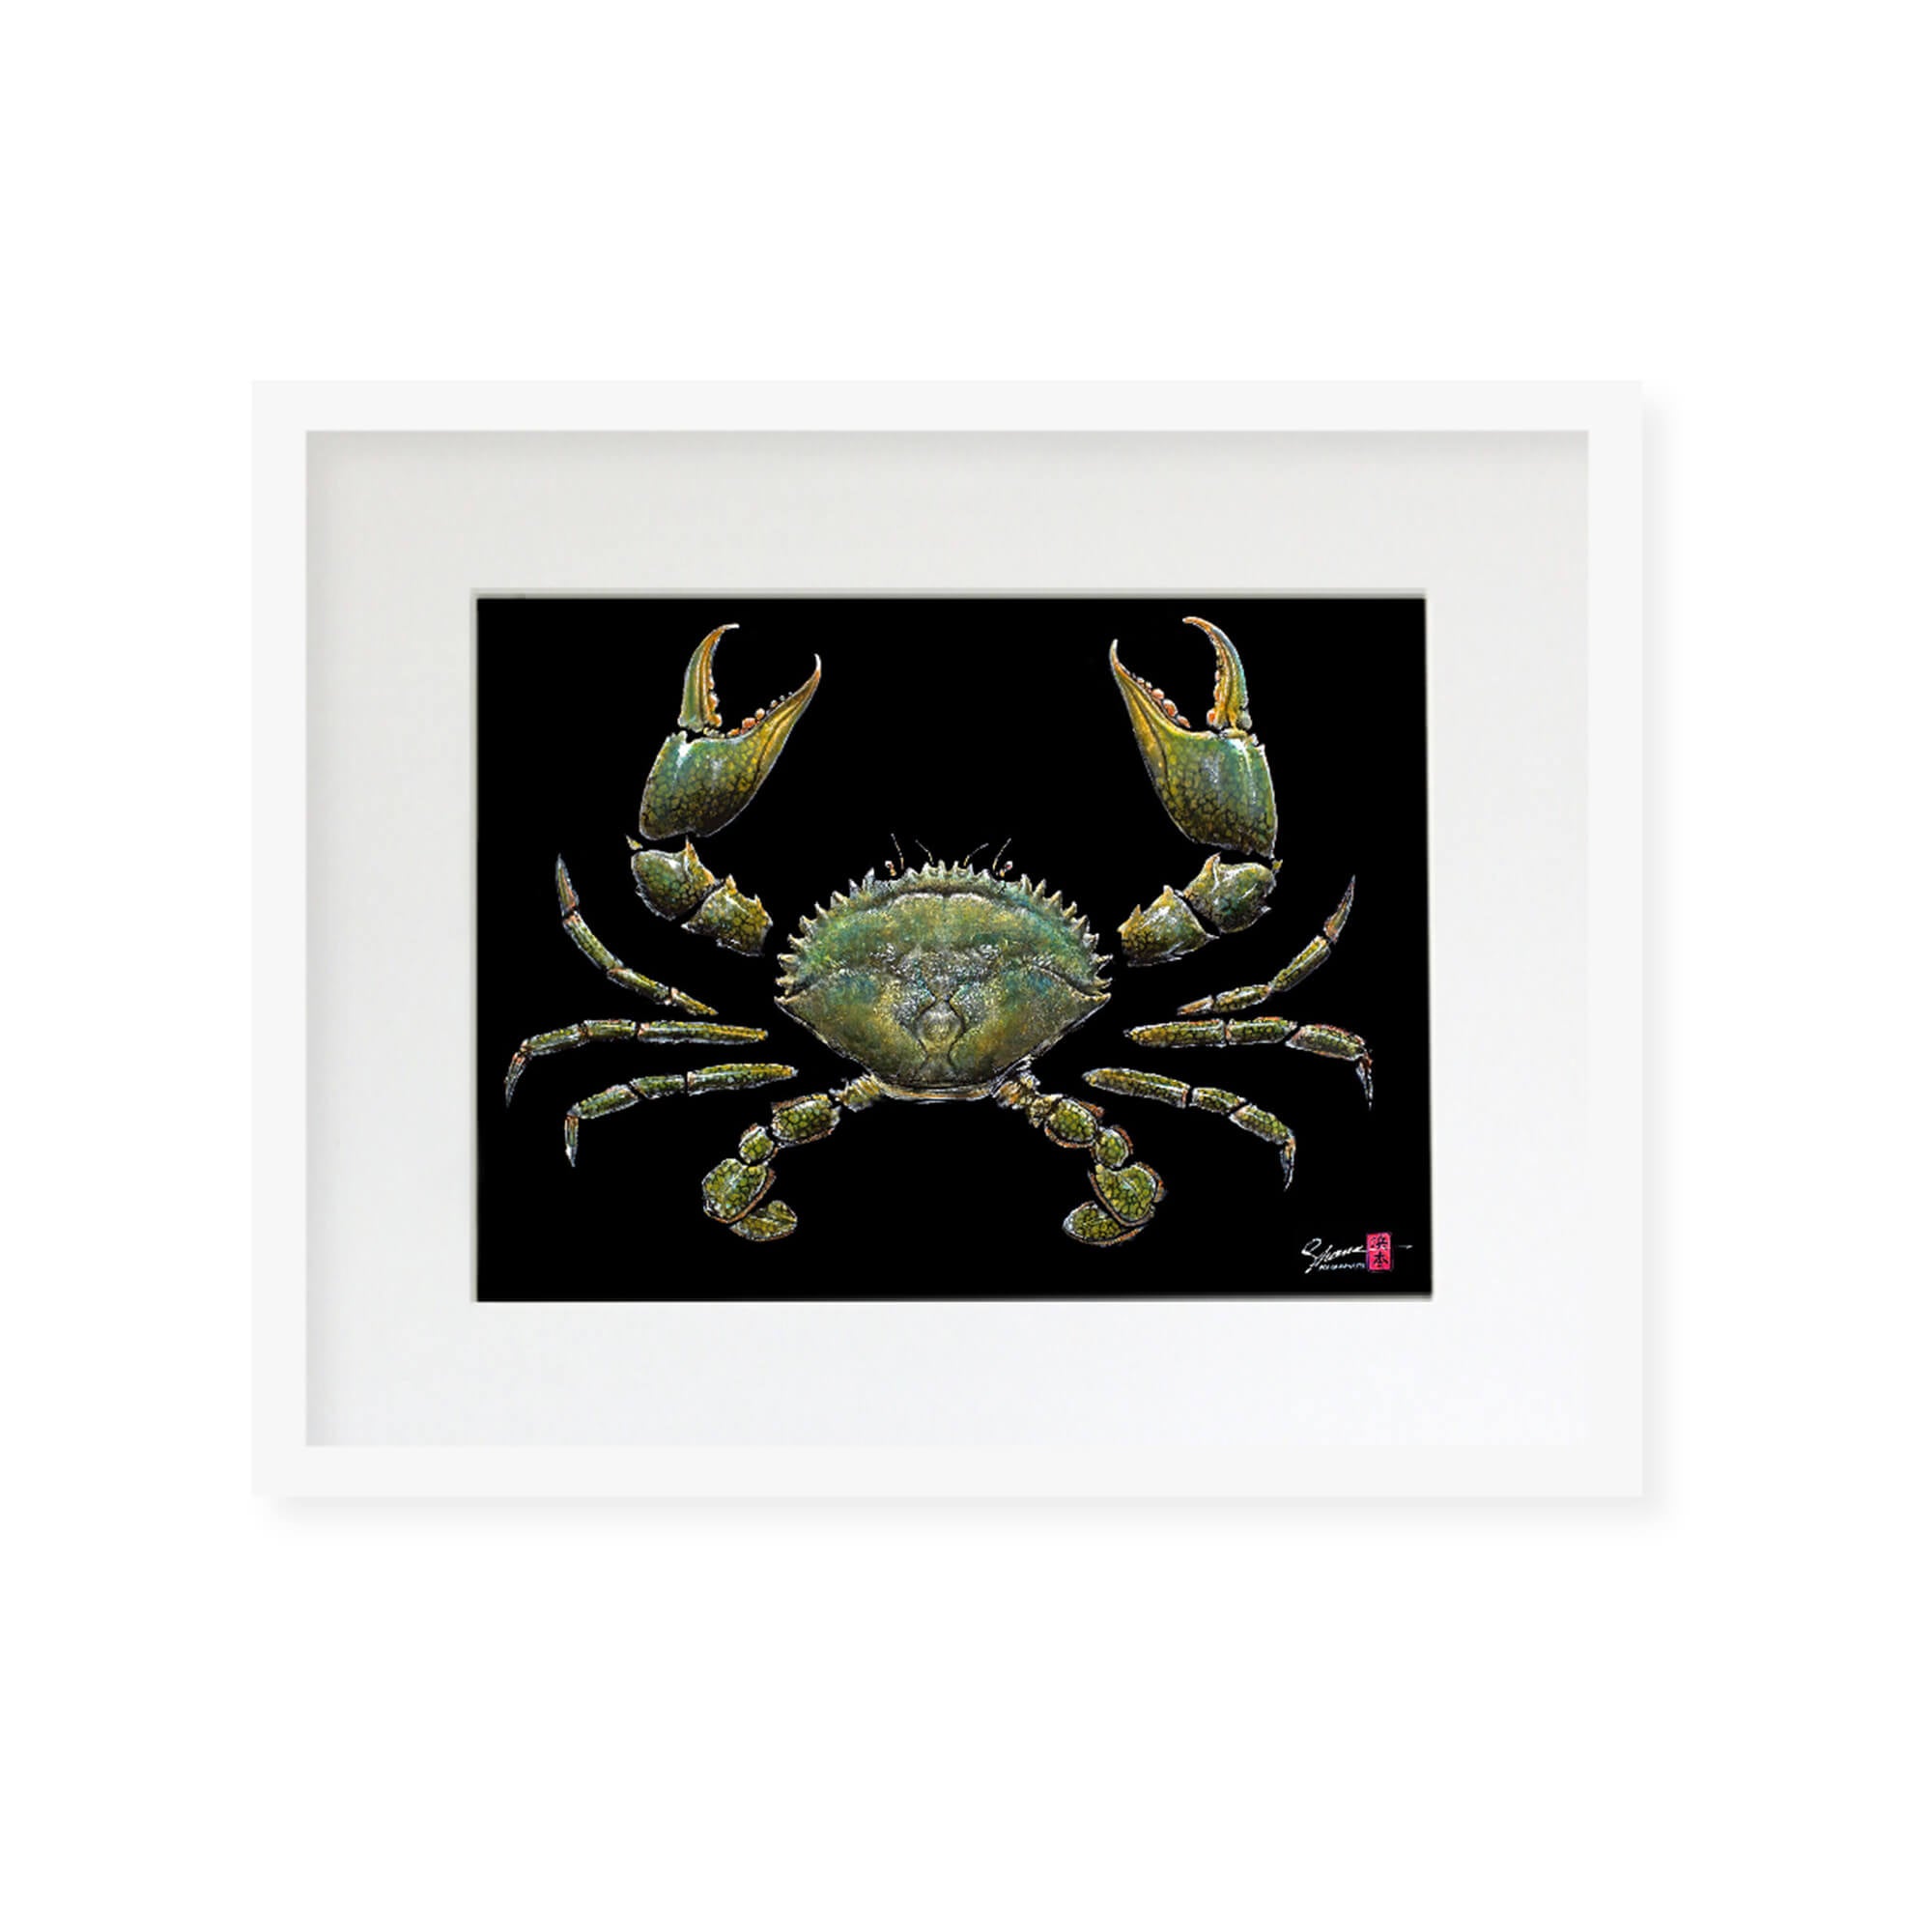 Framed matted print of Samoan Crab in black frame by Hawaii gyotaku artist Shane Hamamoto